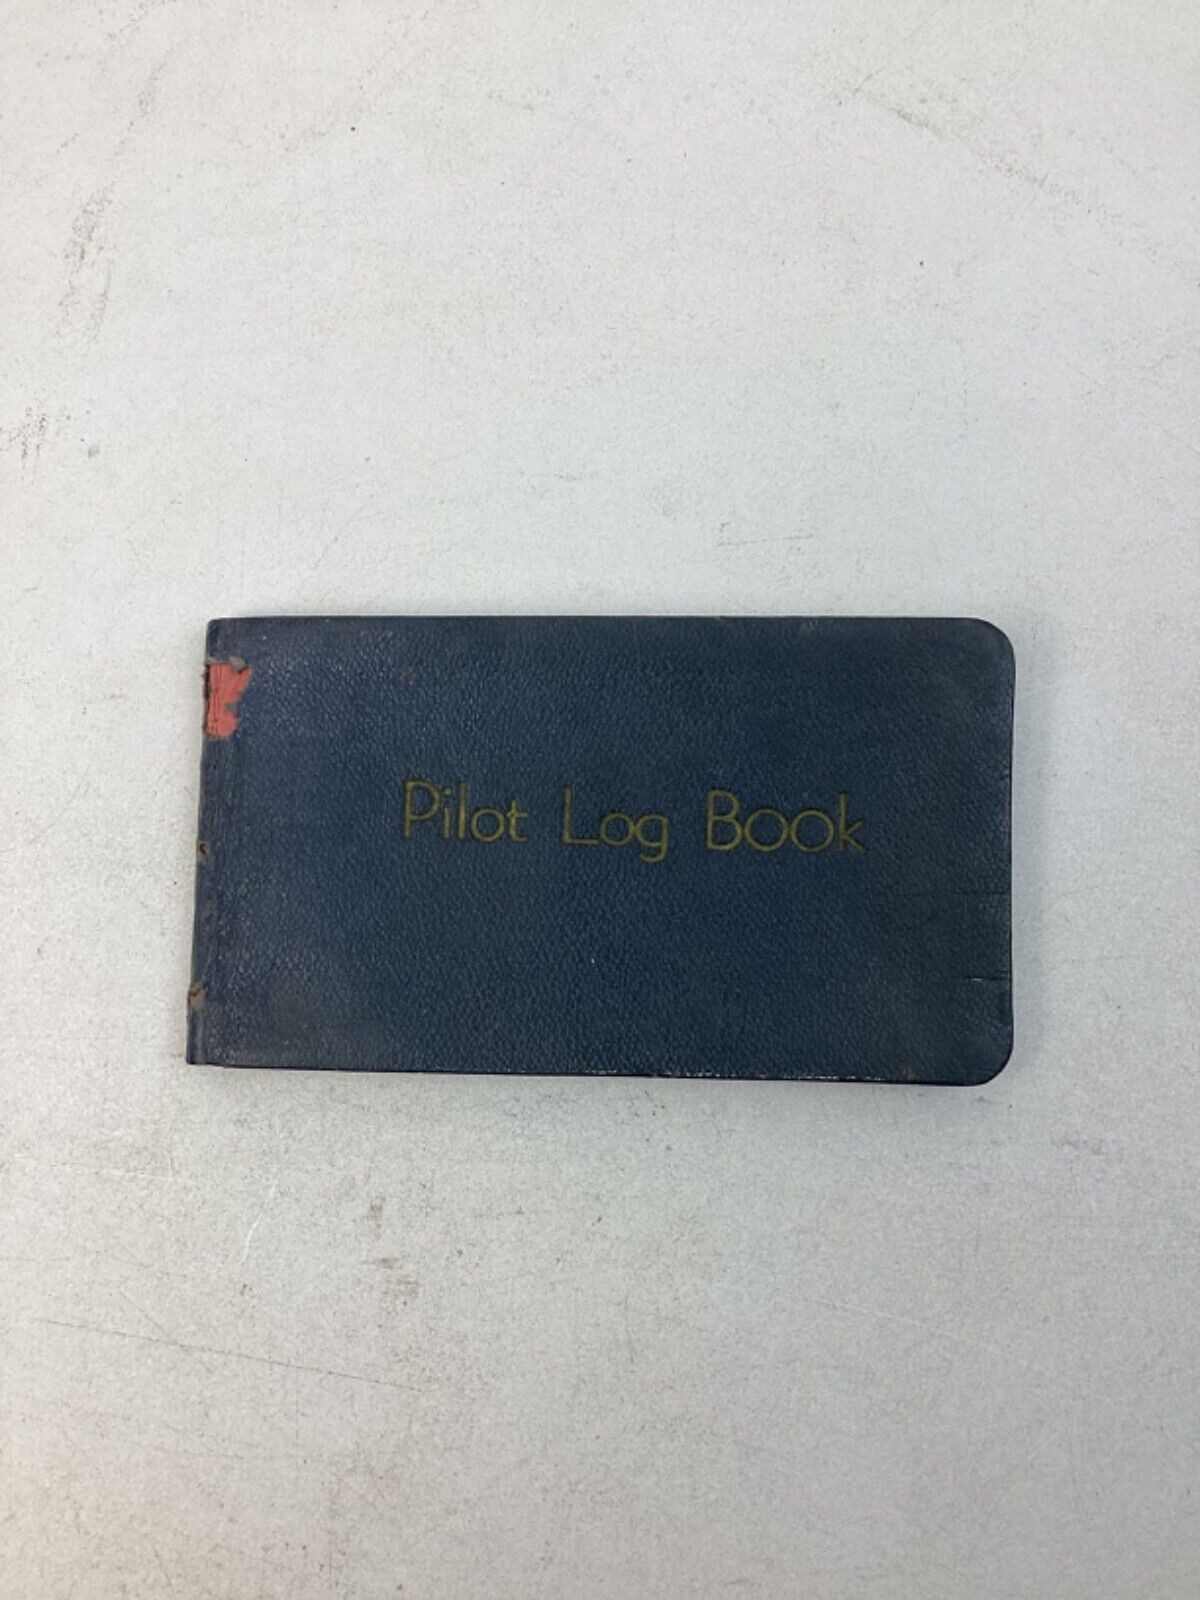 Vintage Pilot Log Book From 1967